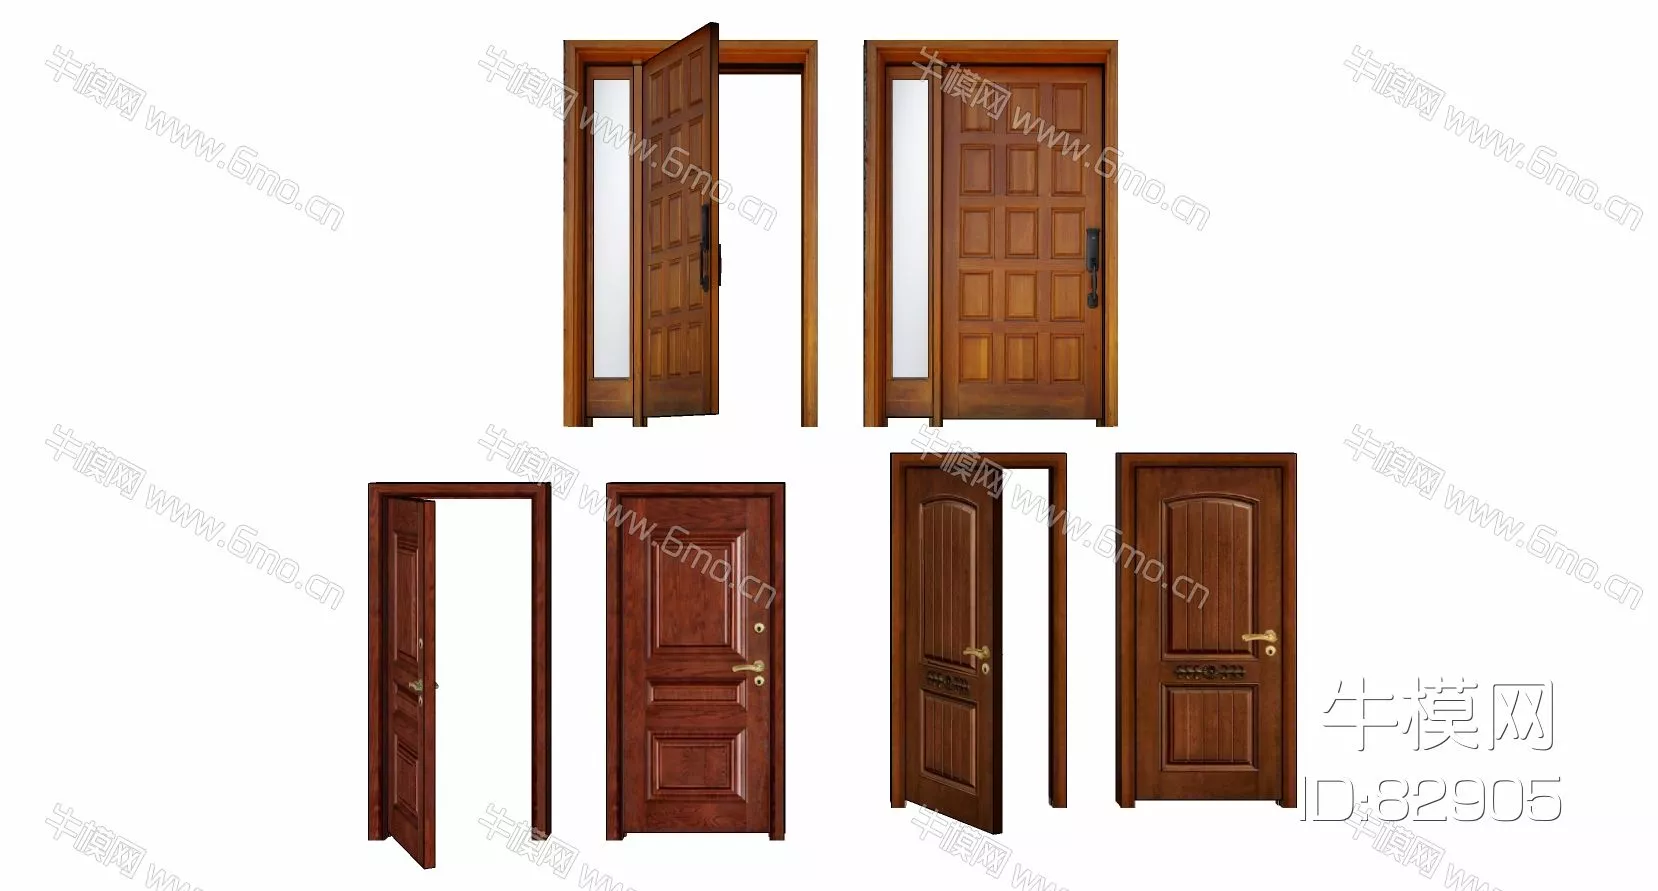 MODERN DOOR AND WINDOWS - SKETCHUP 3D MODEL - ENSCAPE - 82905